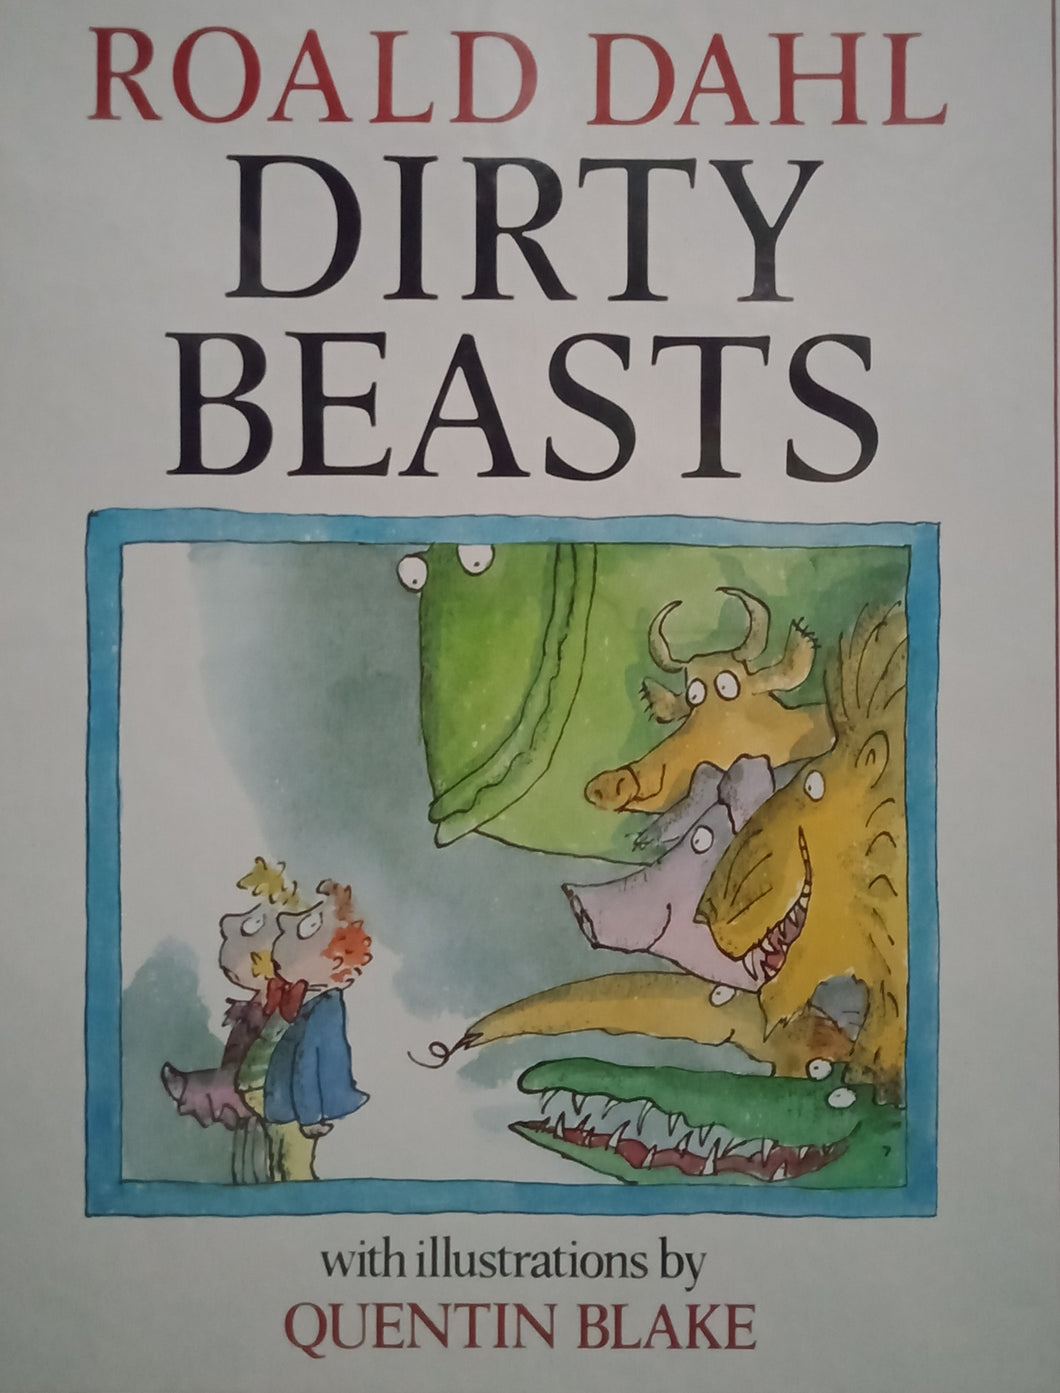 Roald Dahl Dirty Beasts by Roald Dahl